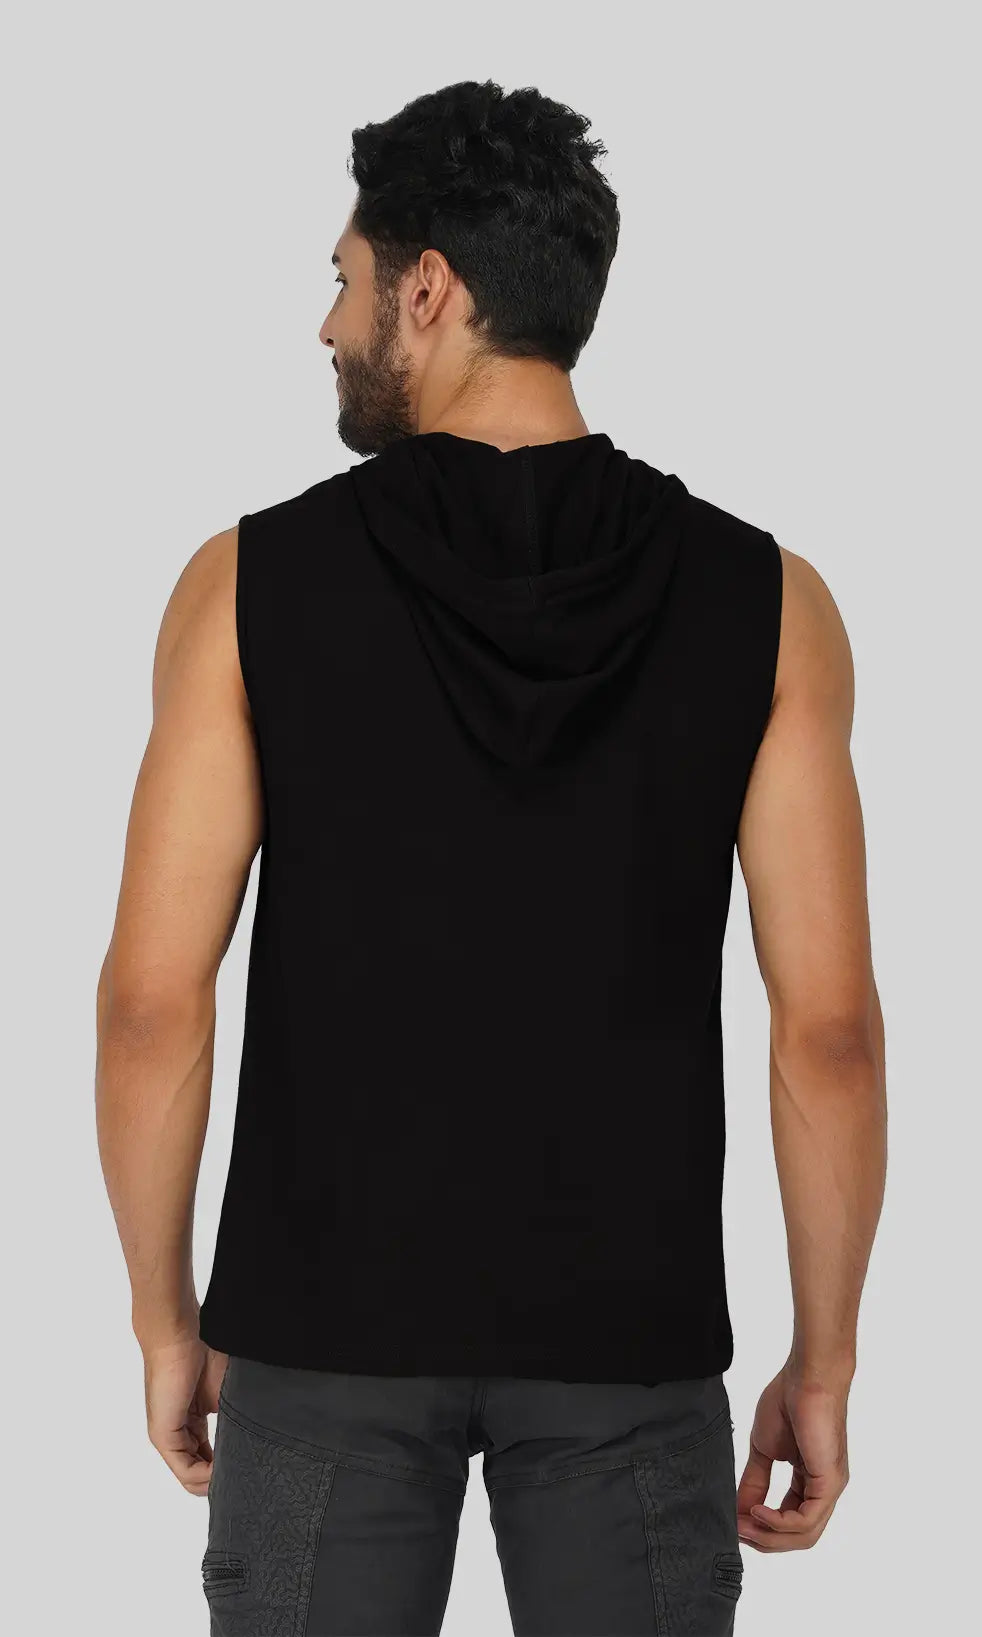 Mebadass Cotton Men's Sleeveless Vest with Hood- Black